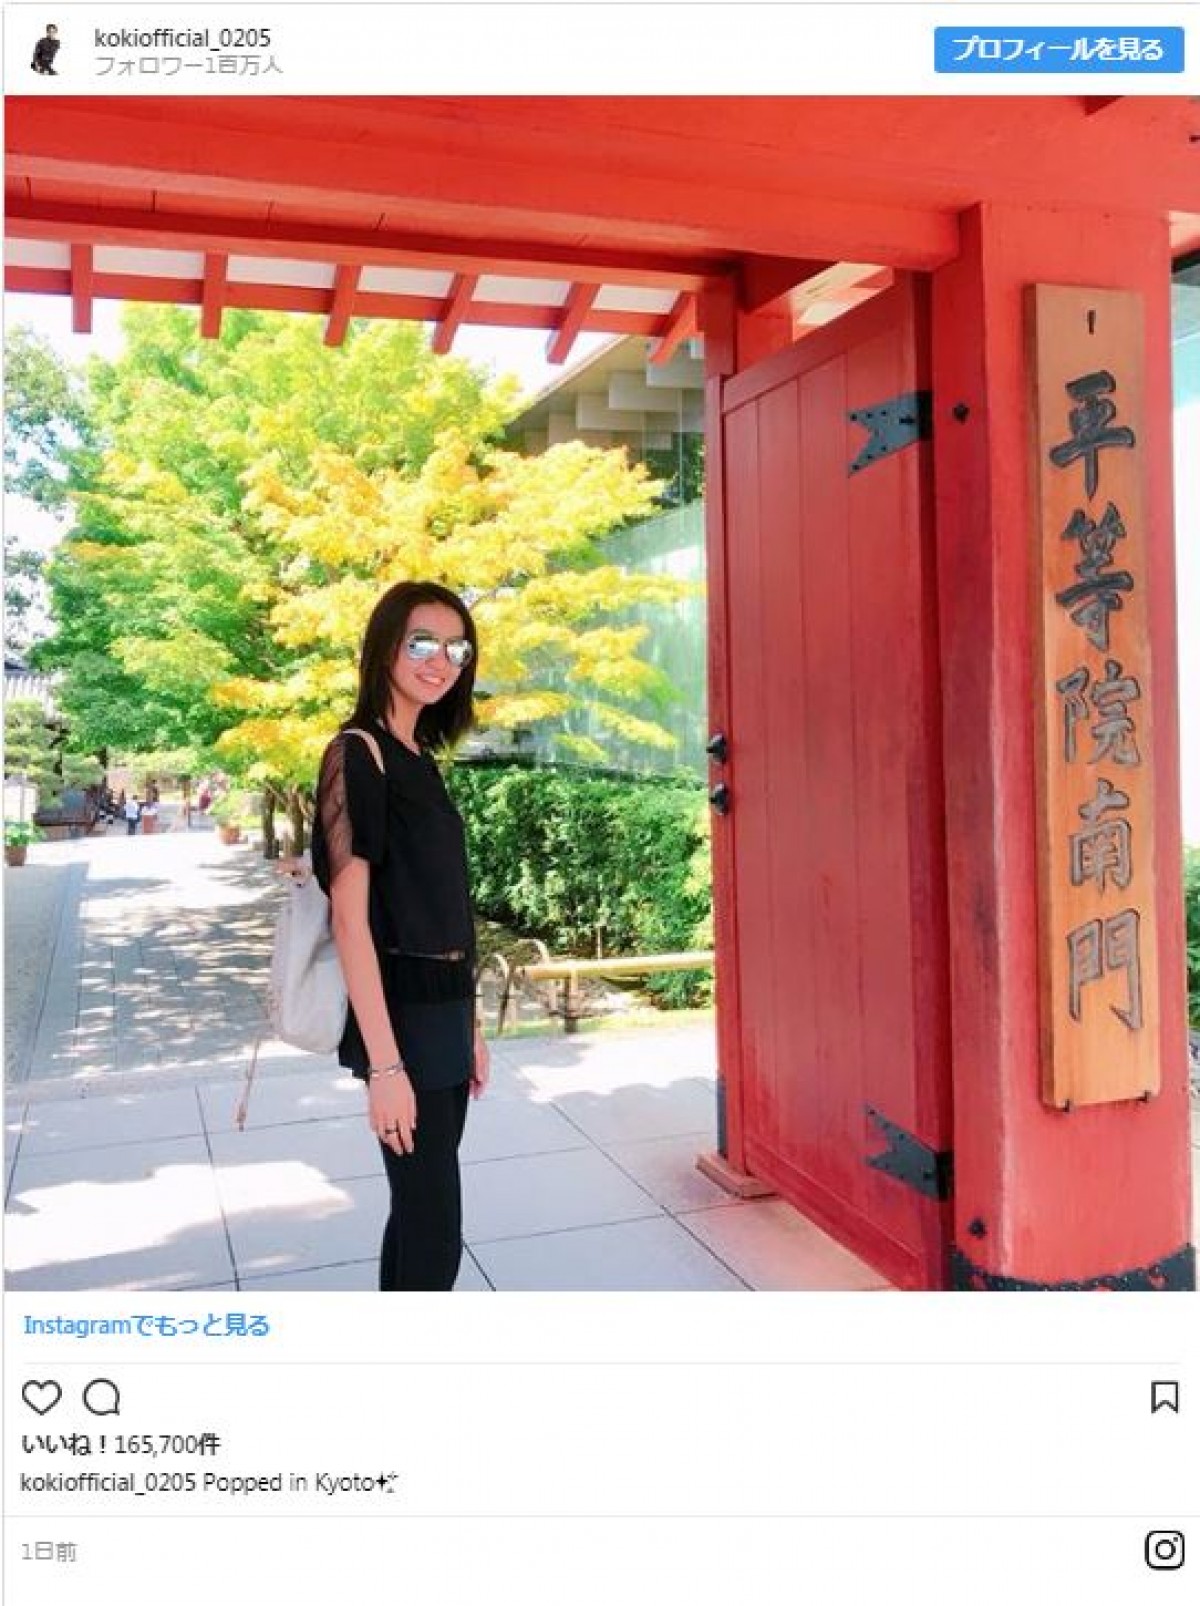 Koki，古都・京都を巡る涼し気な姿に「清々しくてカッコイイ」の声